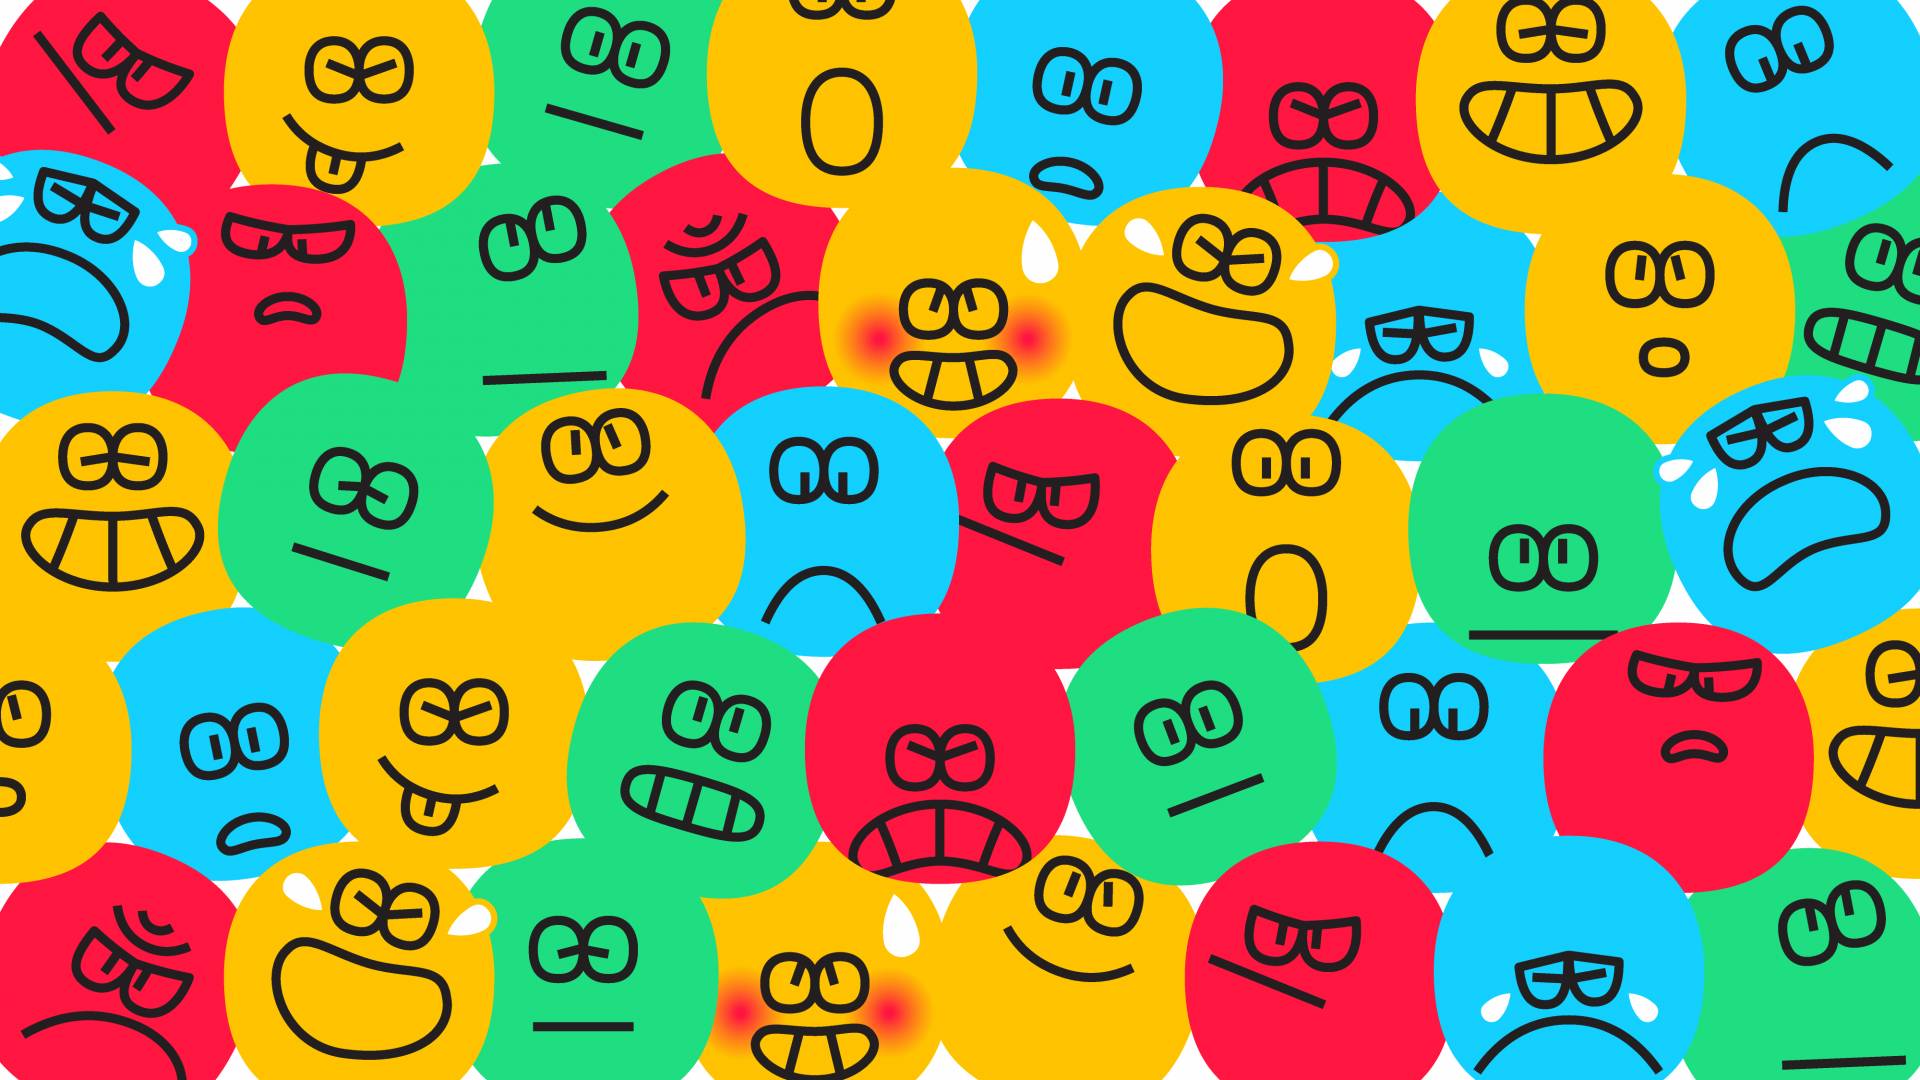 Emoticons representing various emotions